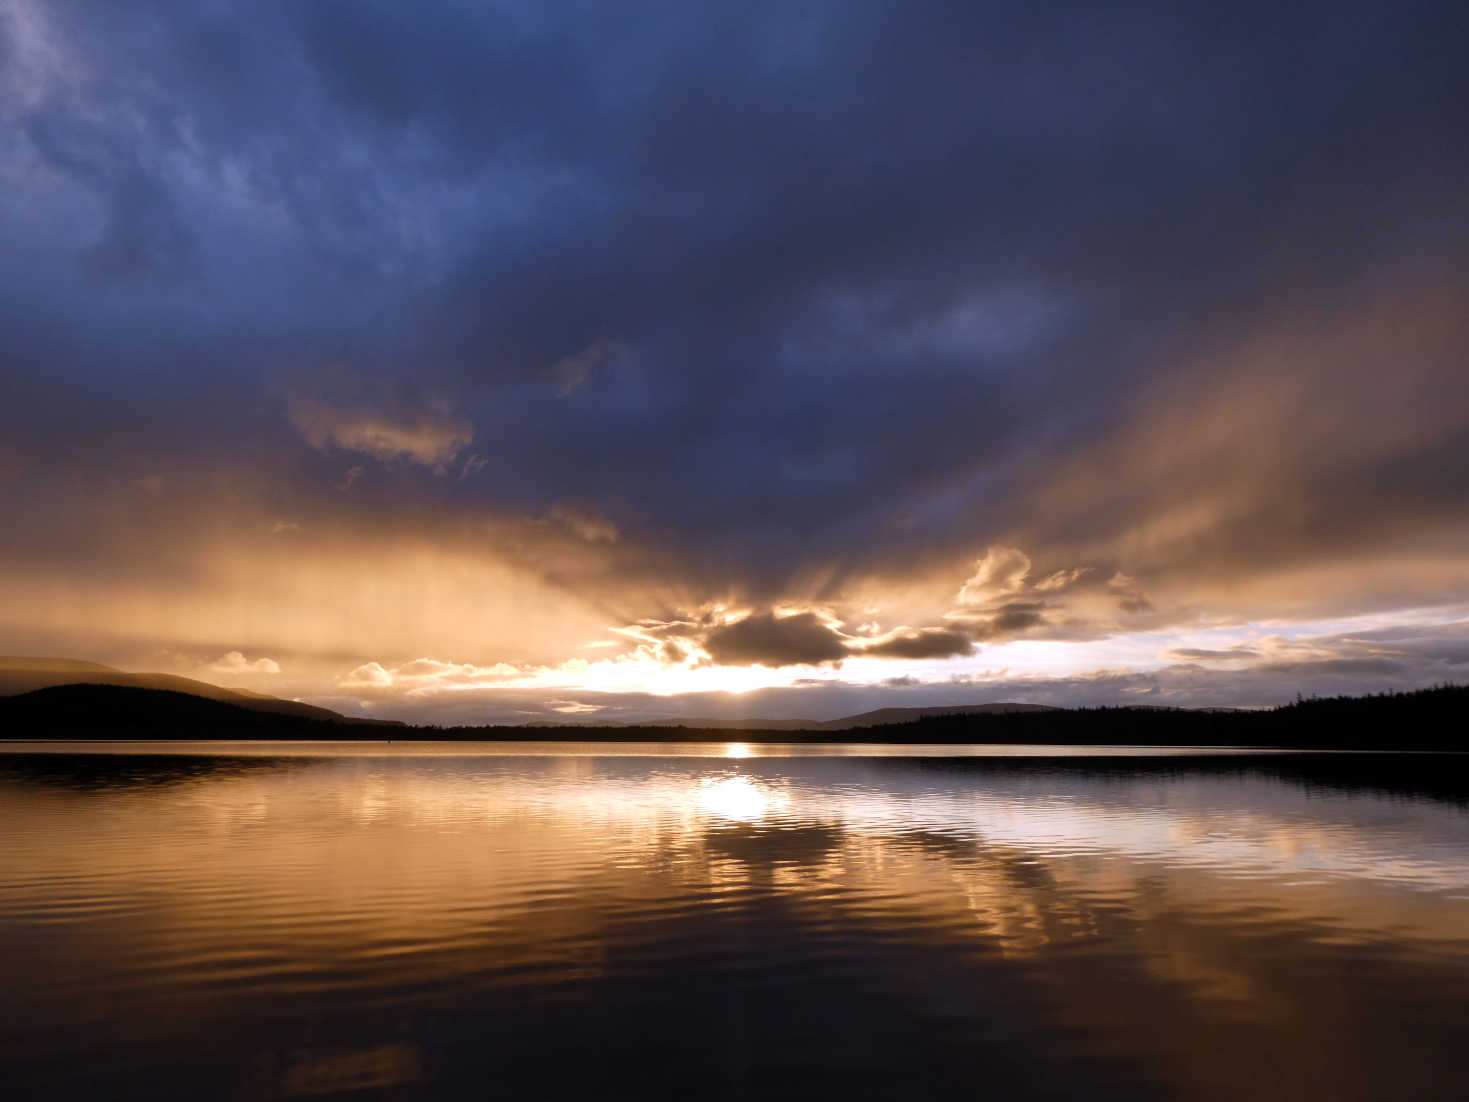 another sunset over Loch Morlich